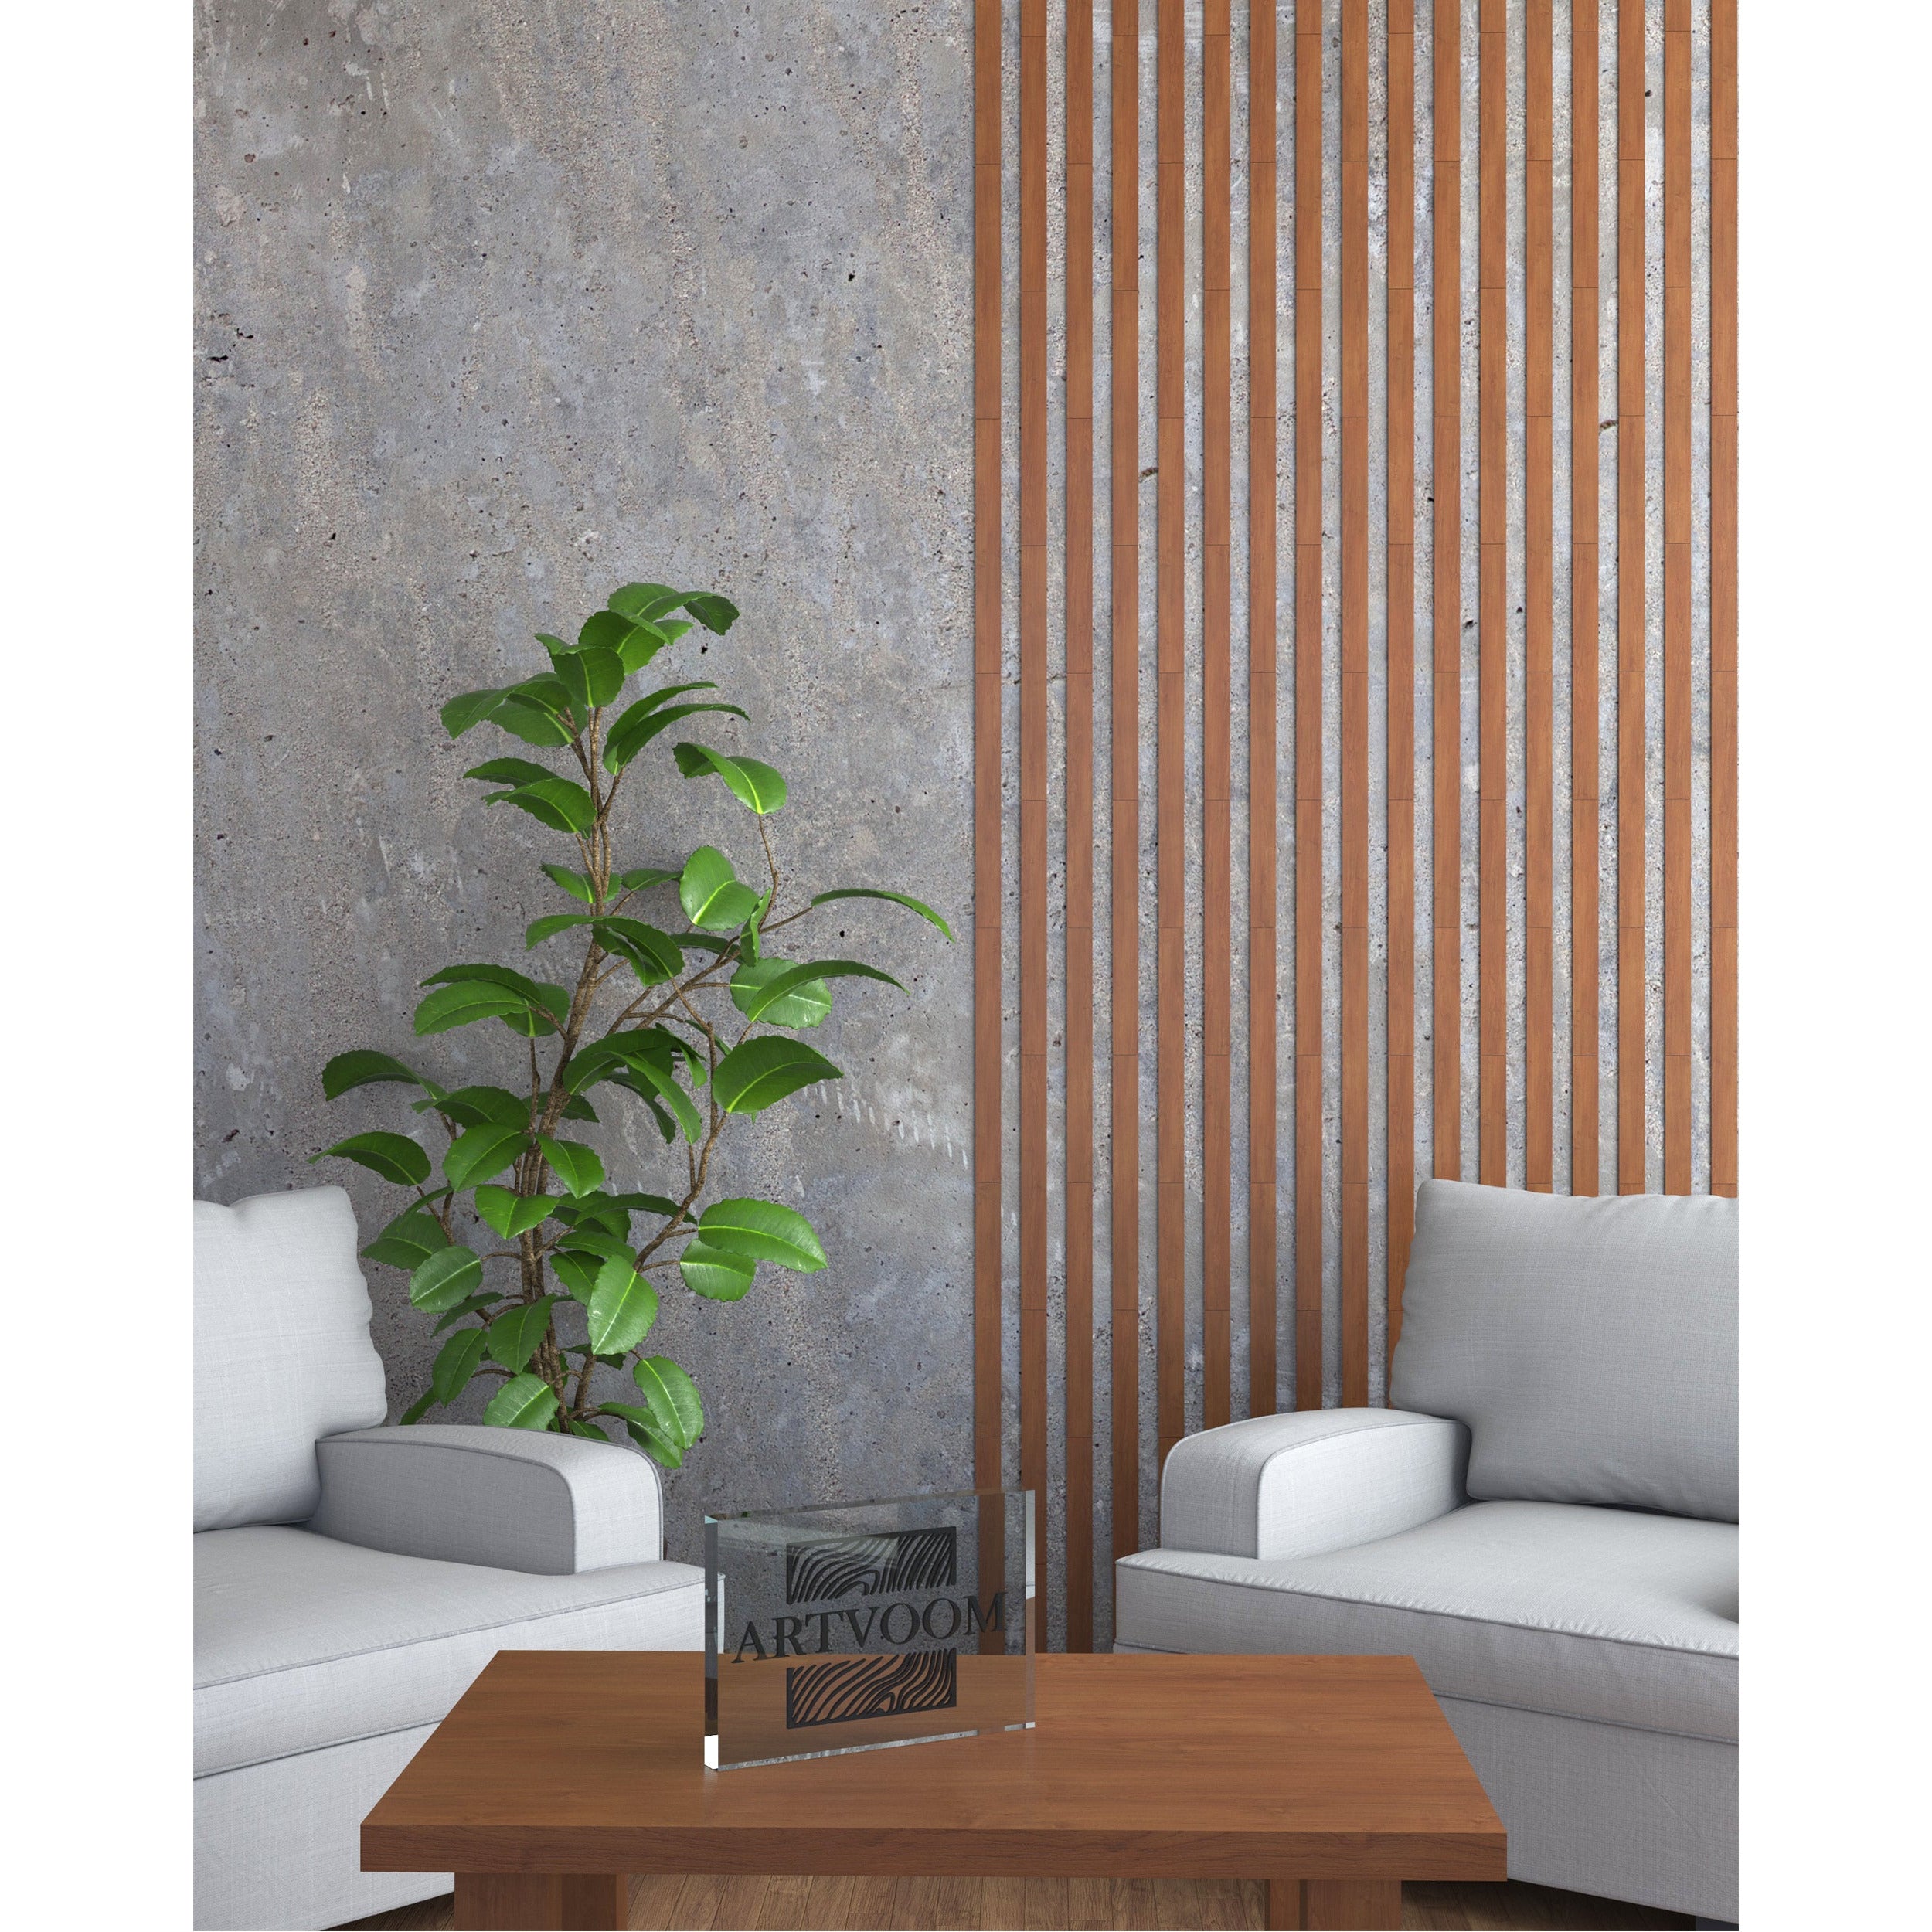 Narrow Oil Oak Wooden Wall Slats, 24 pcs in box. Artvoom Wall Decor